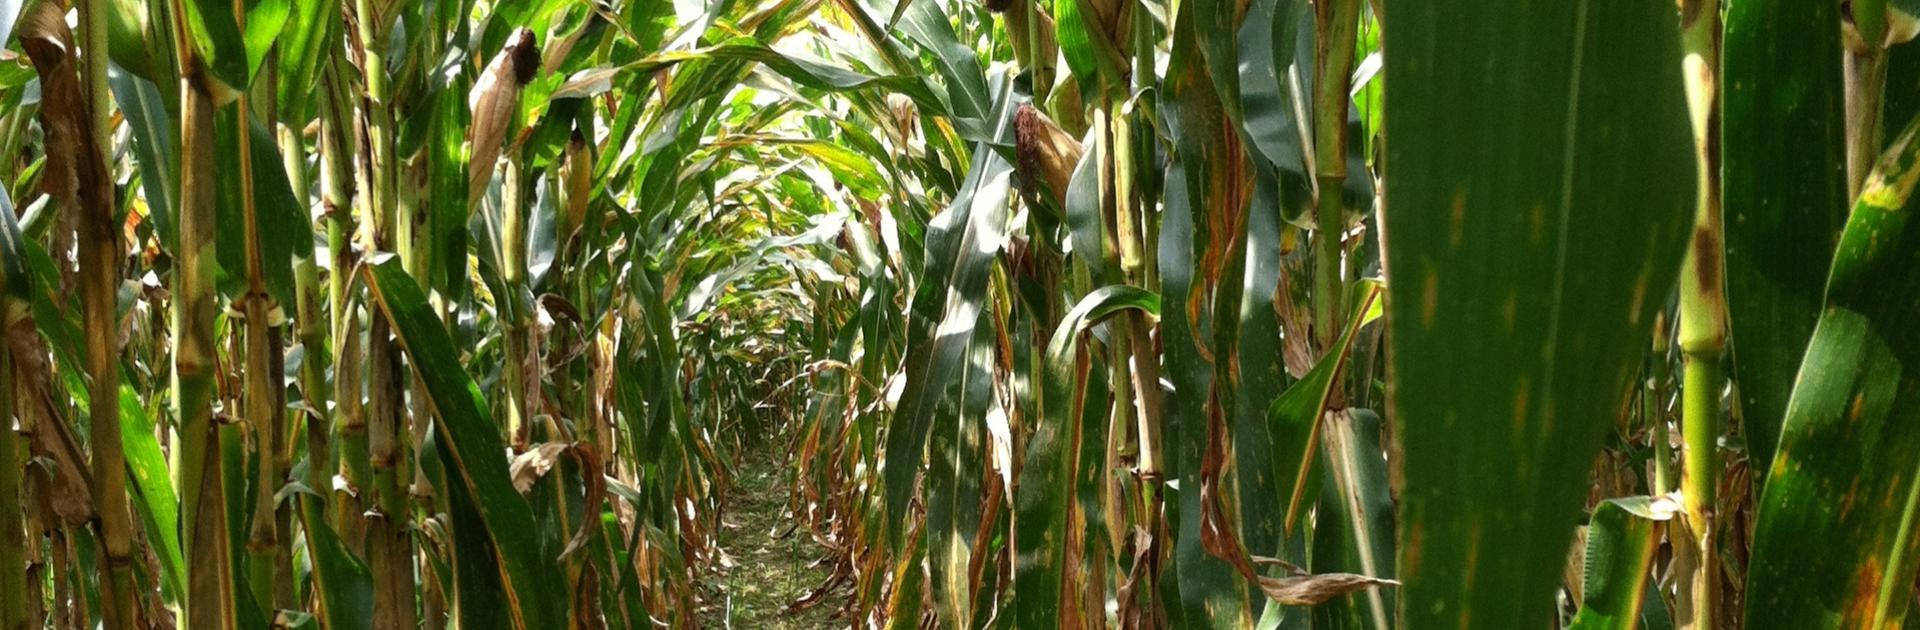 rows of corn